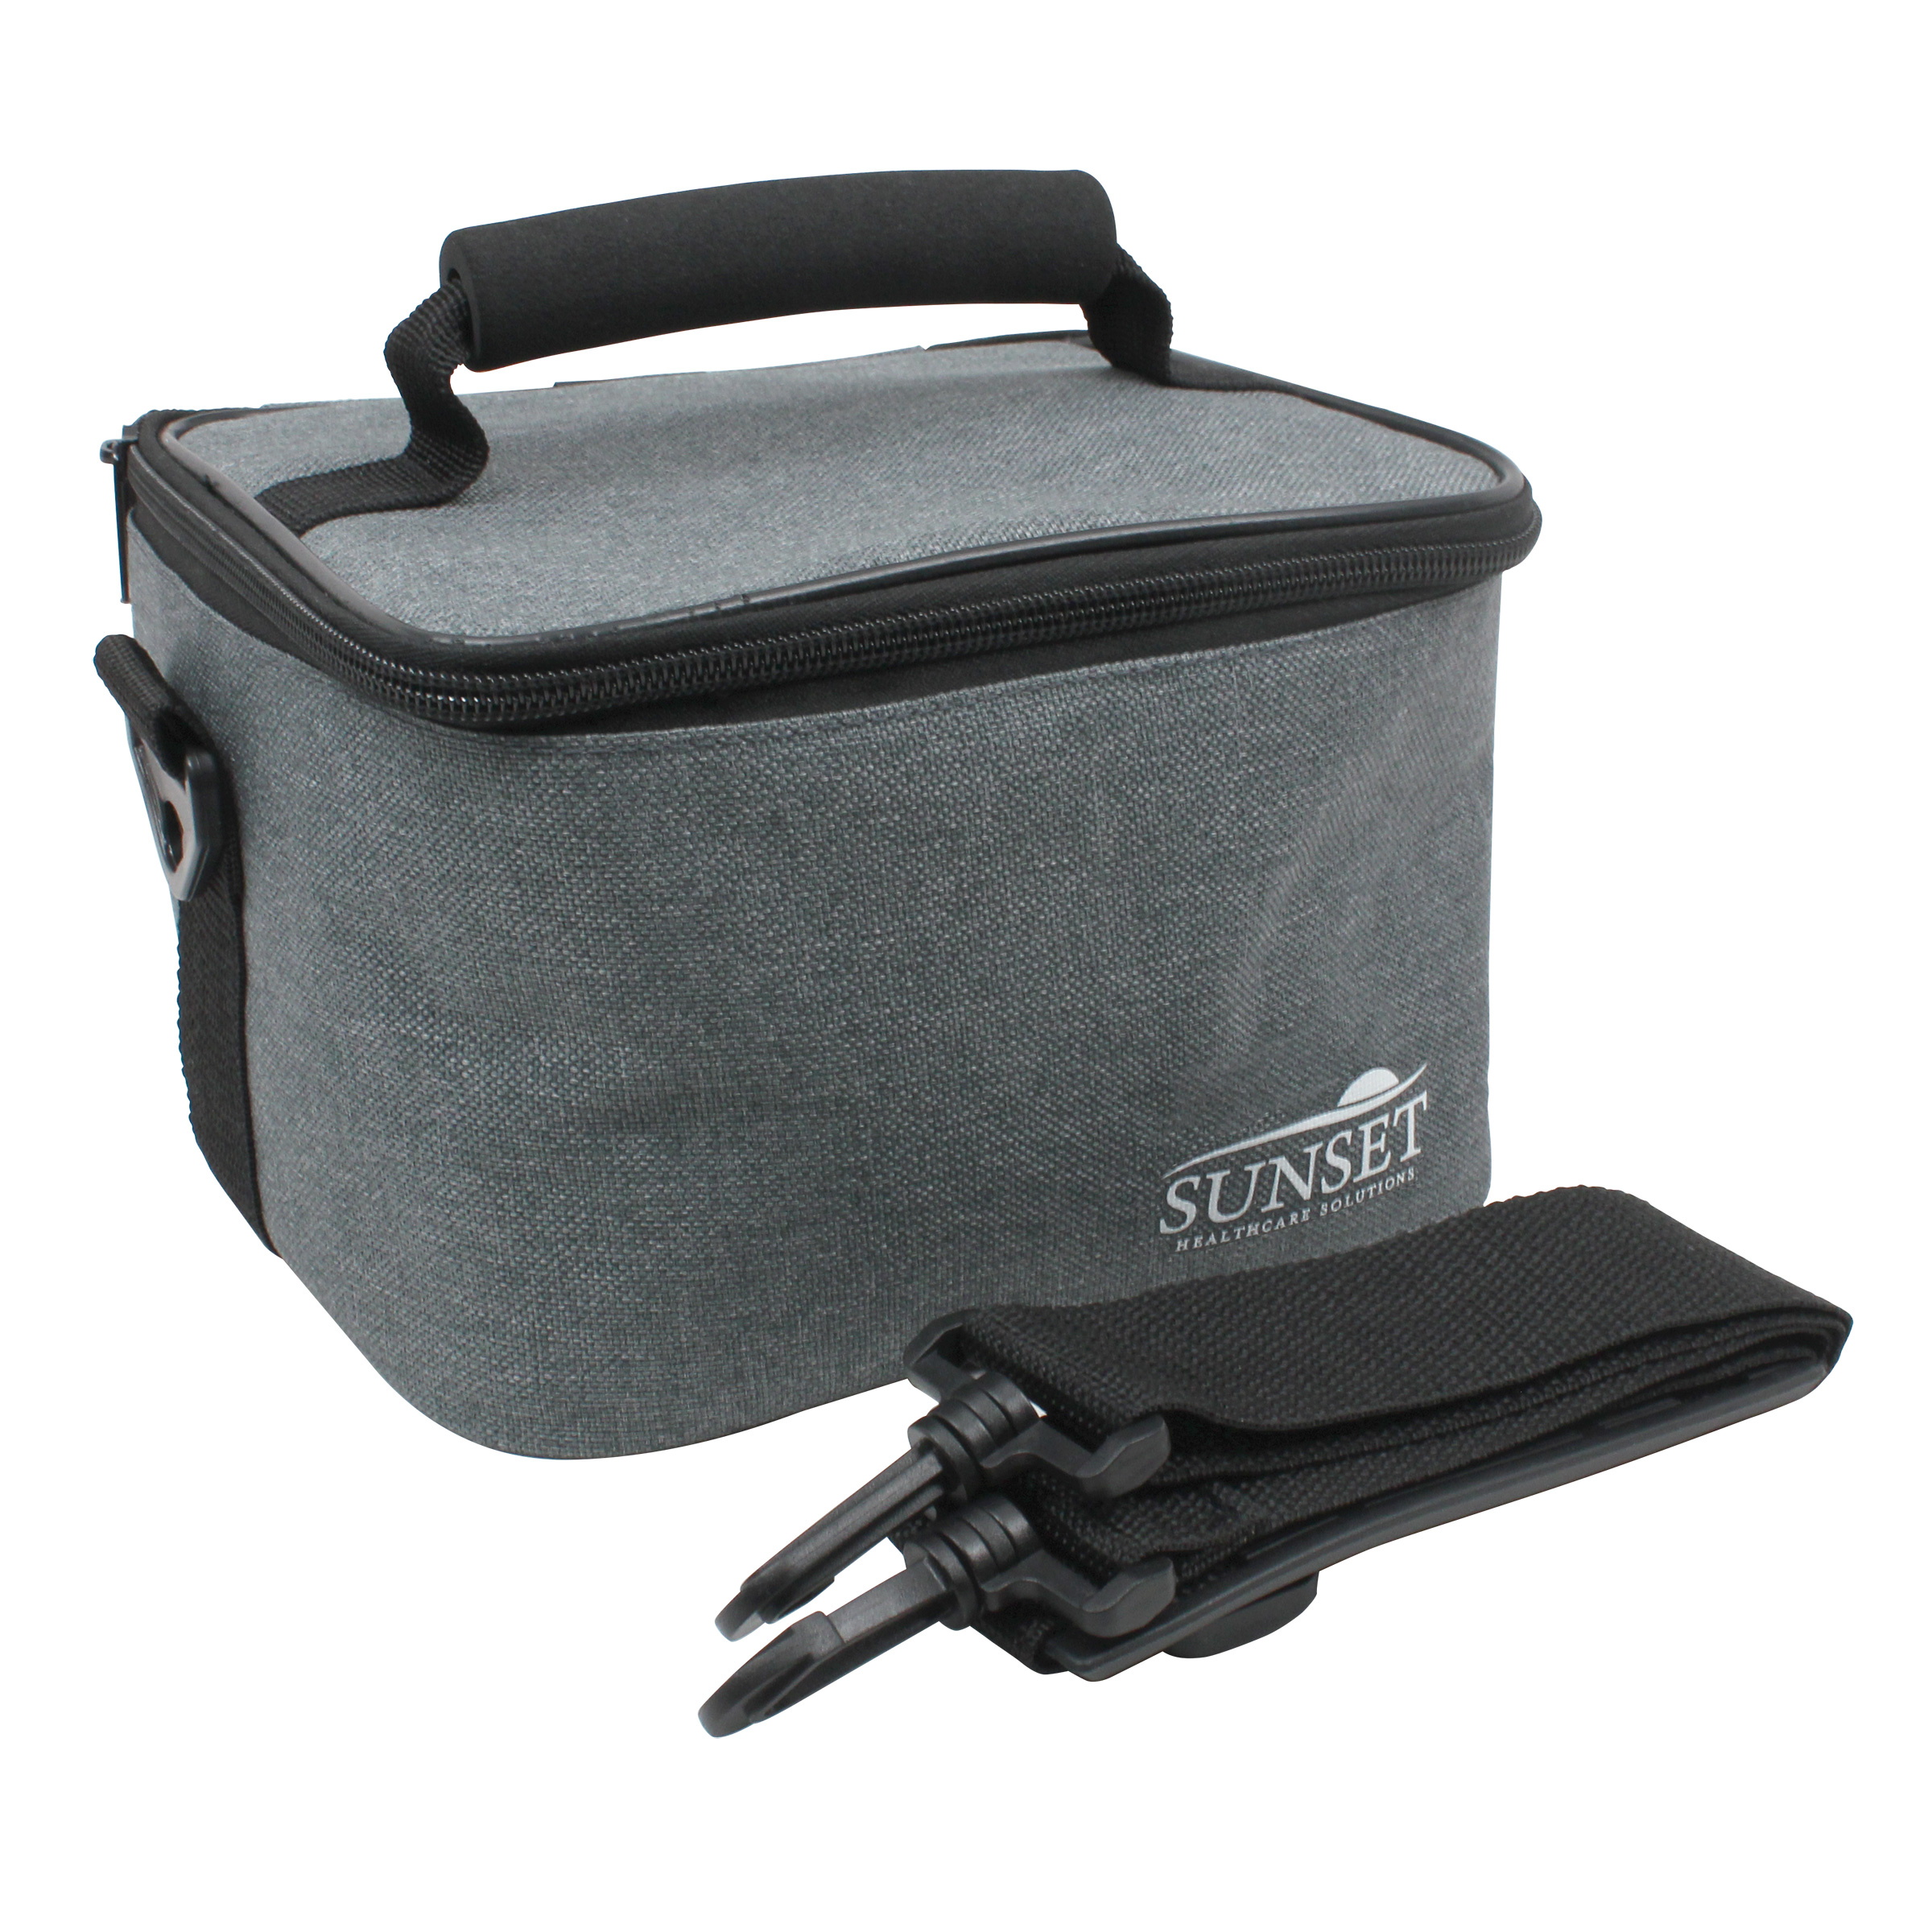 Carry bag for Sunset Nebulizer - SecondwindCPAP